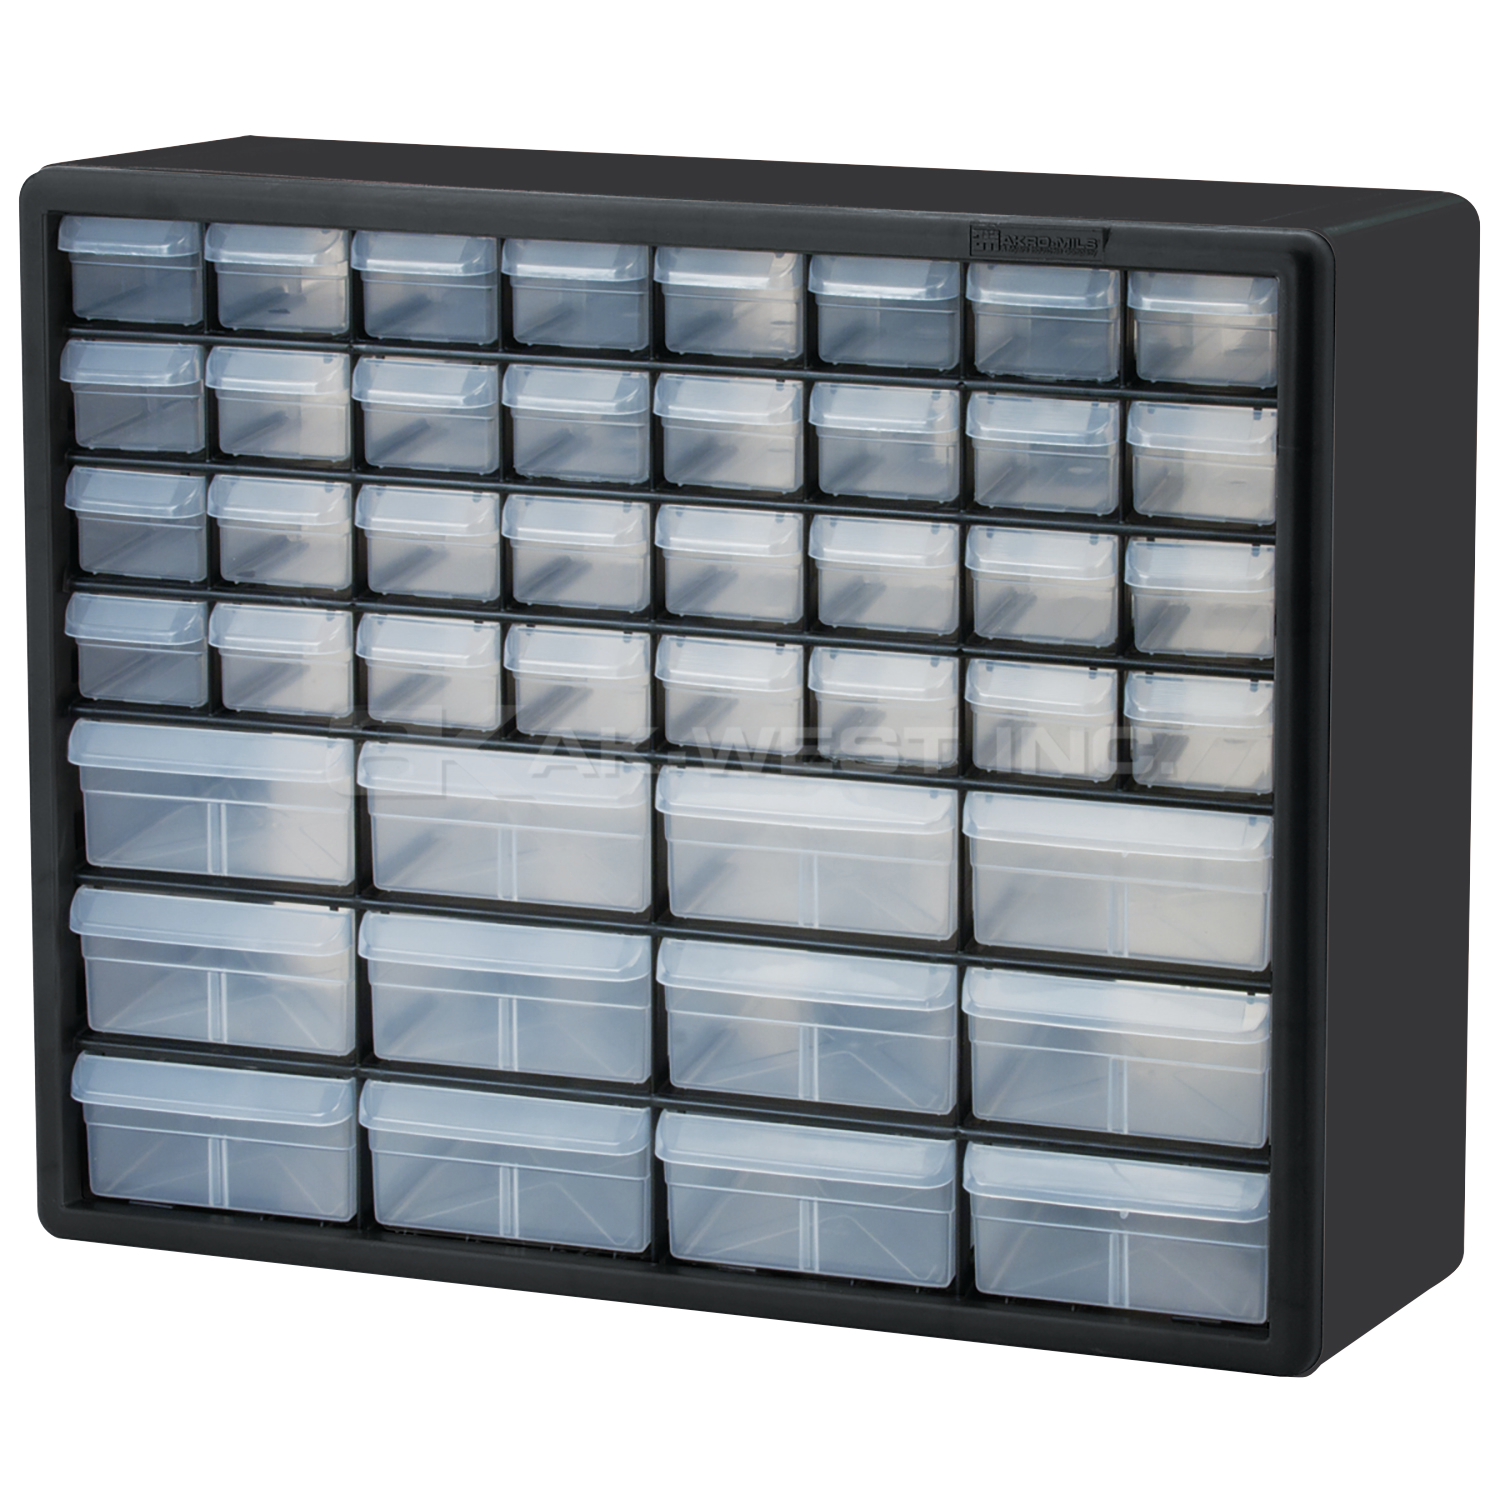 Black, 20" x 6-3/8" x 15-13/16" Plastic Storage Cabinet w/ 44 Drawers - Large Drawer Size 6" x 4-9/16" x 2-3/16", Small Drawer Size 6" x 2-7/32" x 1-9/16"